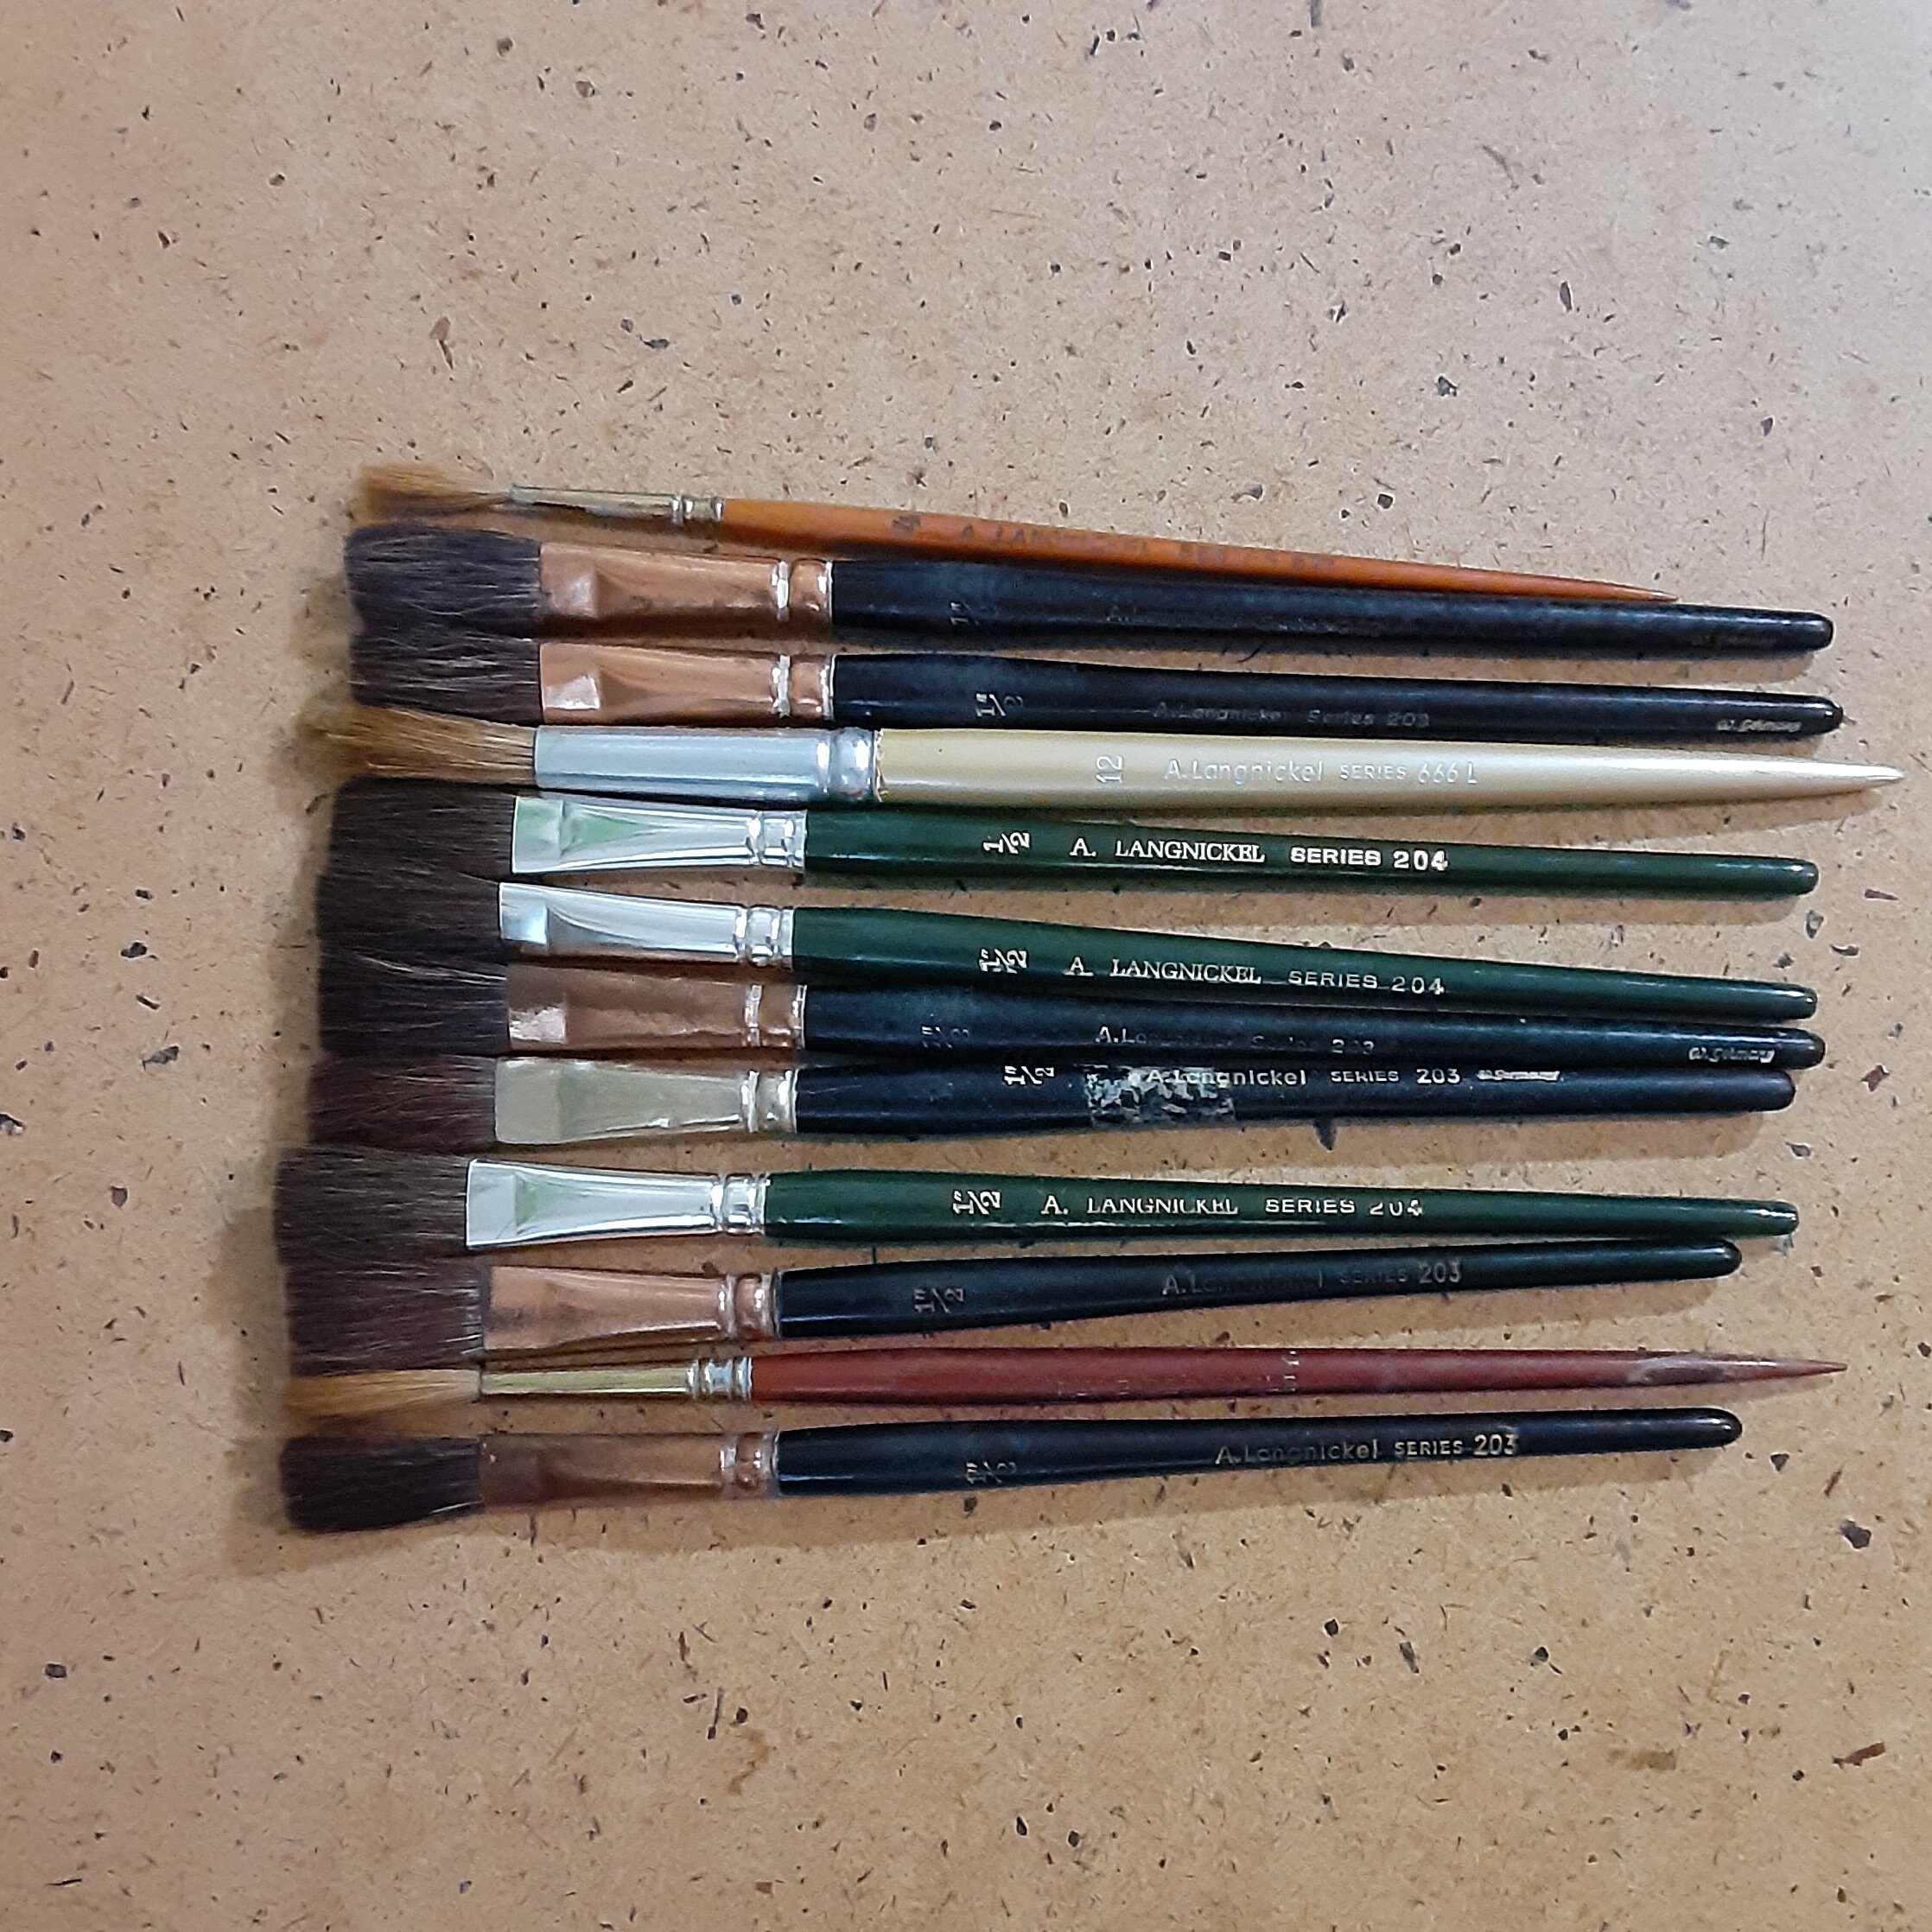 Da Vinci Paintbrush, Paint Brushes Series 1865, Size 16, Filbert Light Ox  Hair Oil and Acrylic Paint Brush. Watercolor, Gouache 